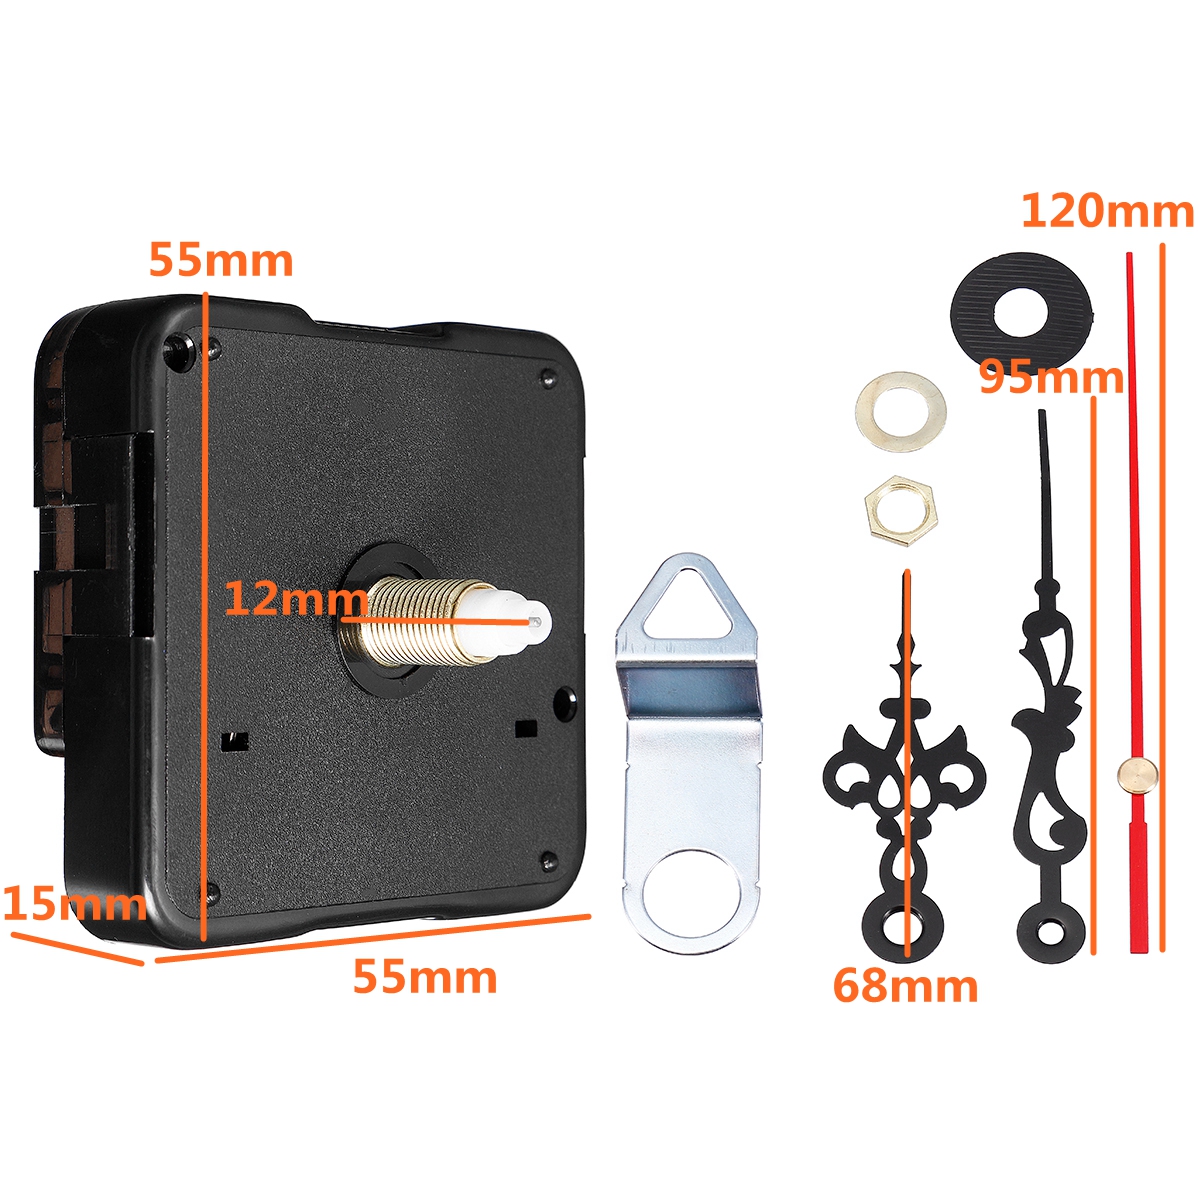 12mm-Quartz-Silent-Clock-Movement-Mechanism-DIY-Wall-Clock-Hour-Minute-Second-Hand-without-Battery-1333711-6